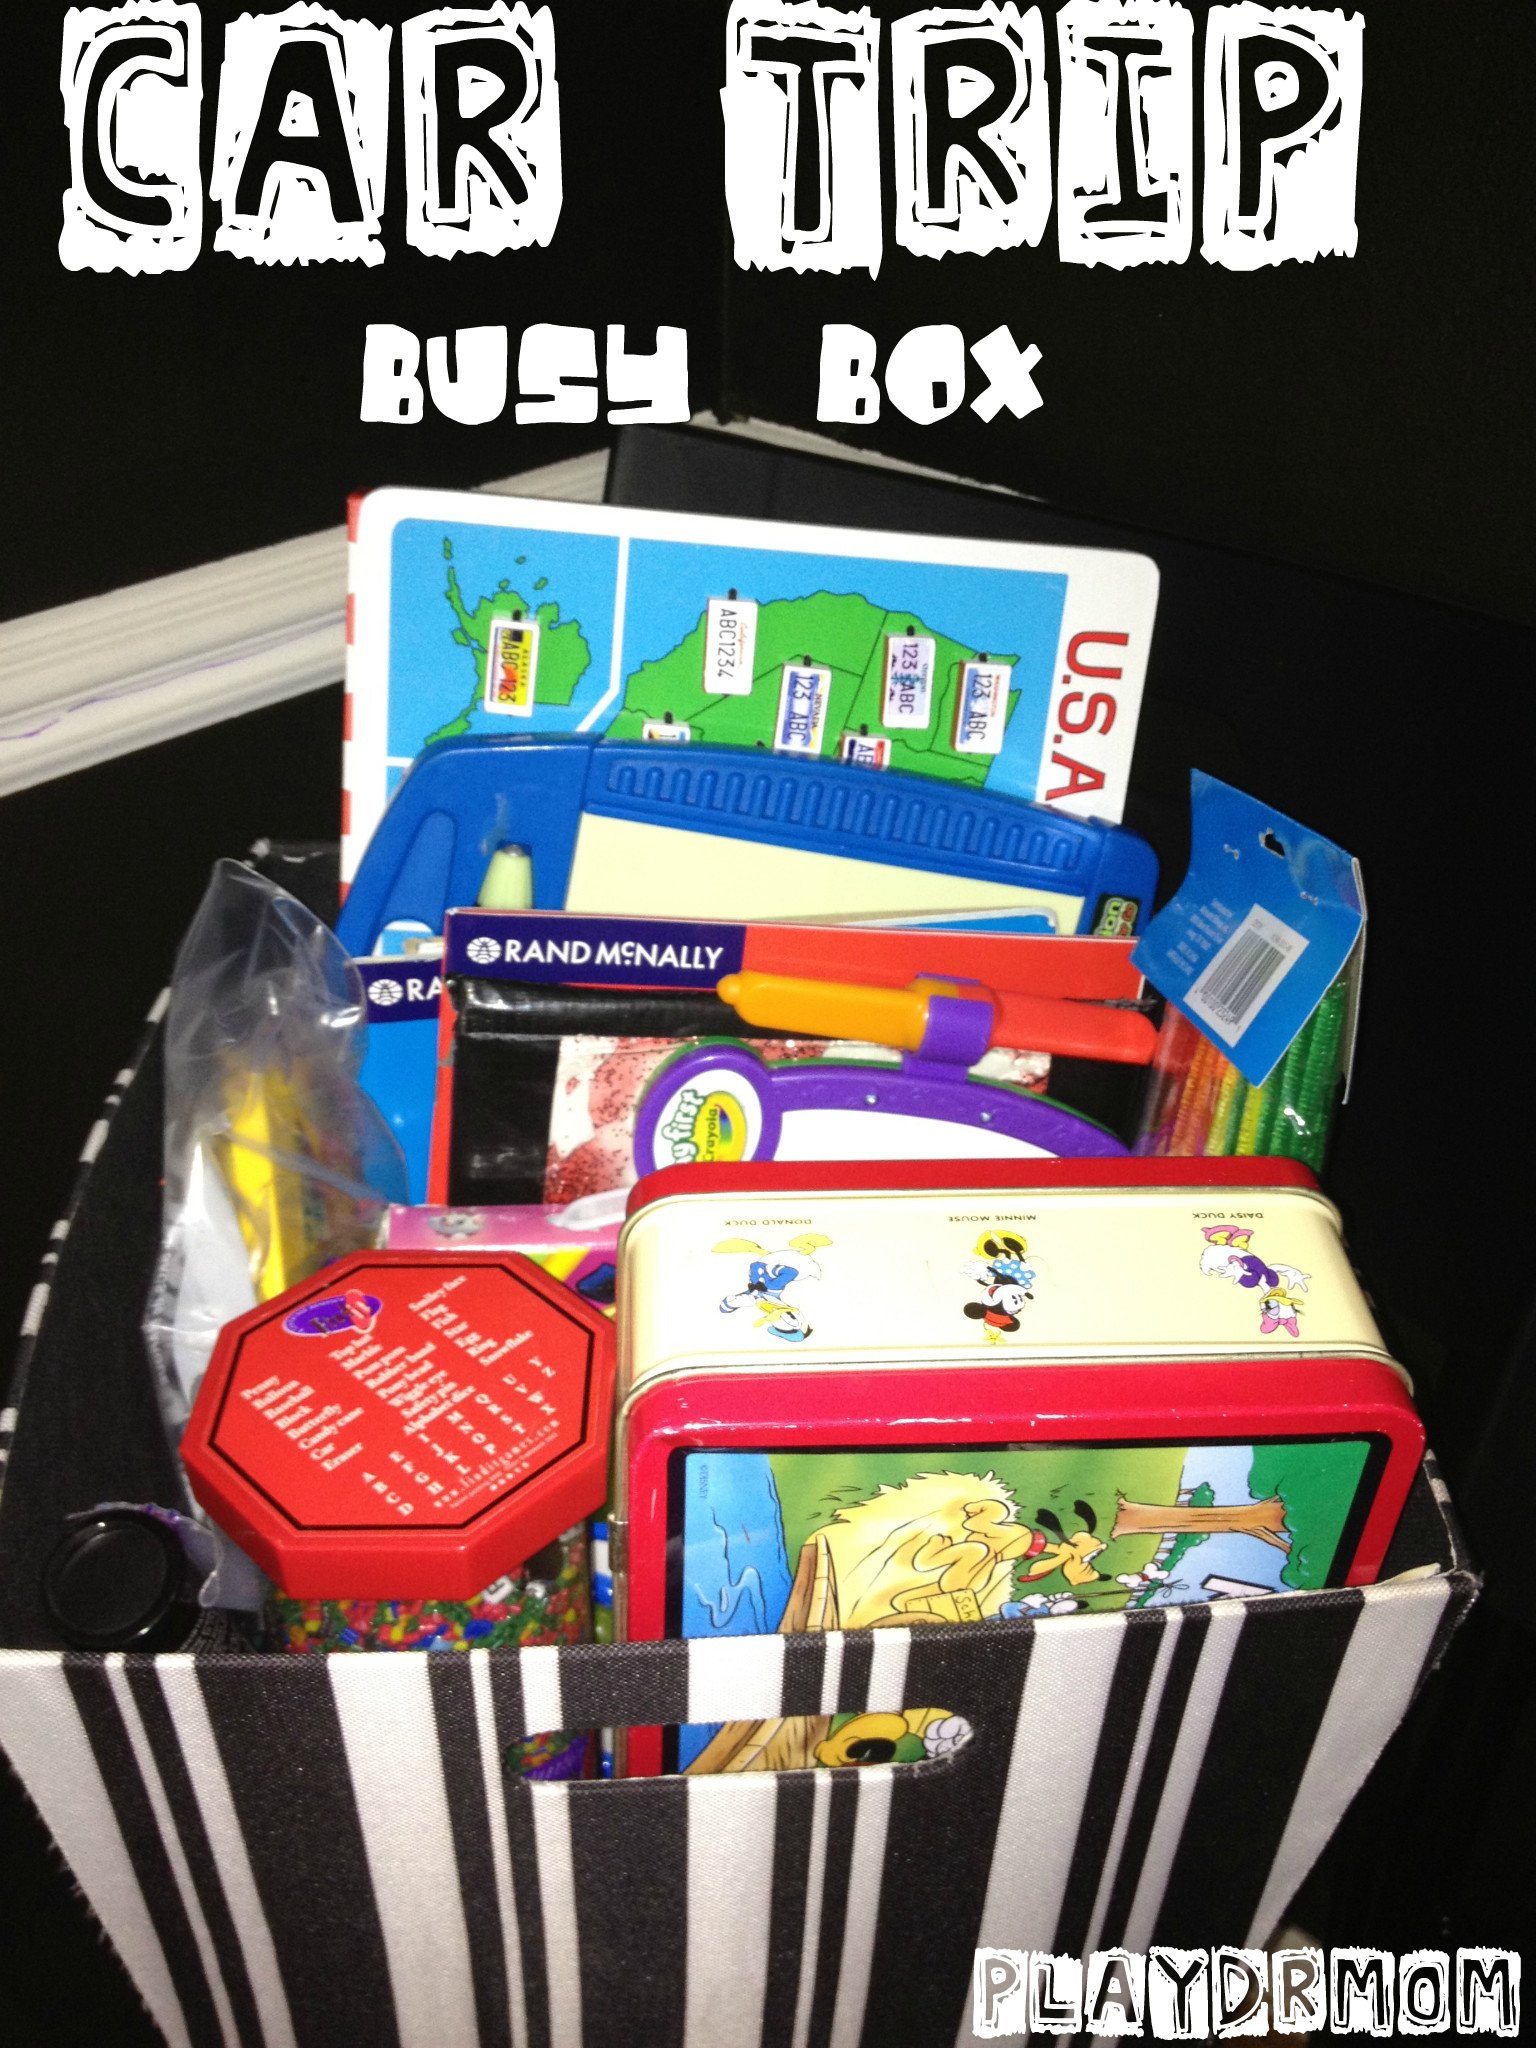 Car Travel Gift Basket Ideas
 Car Trip Busy Box Play Dr Mom